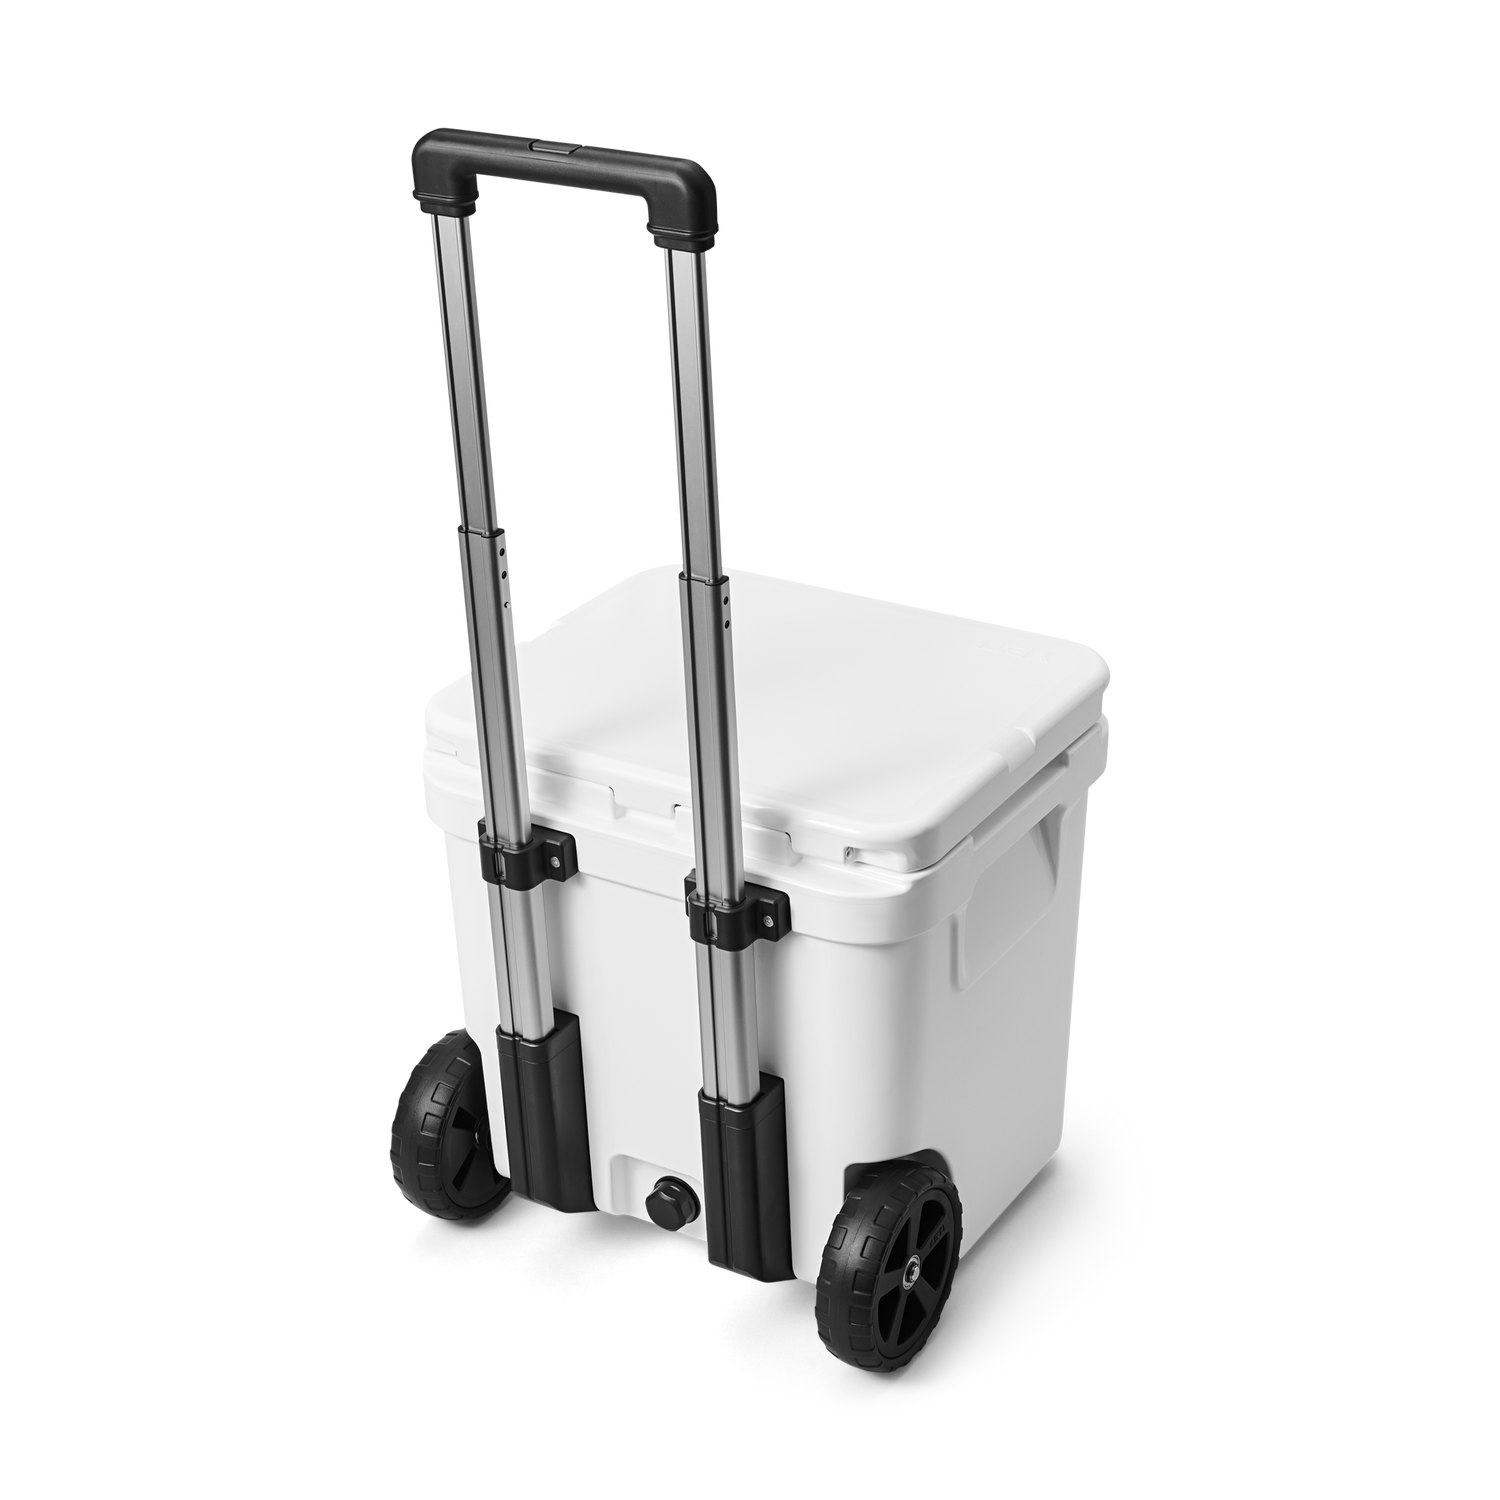 YETI Roadie® 48 Wheeled Cool Box White